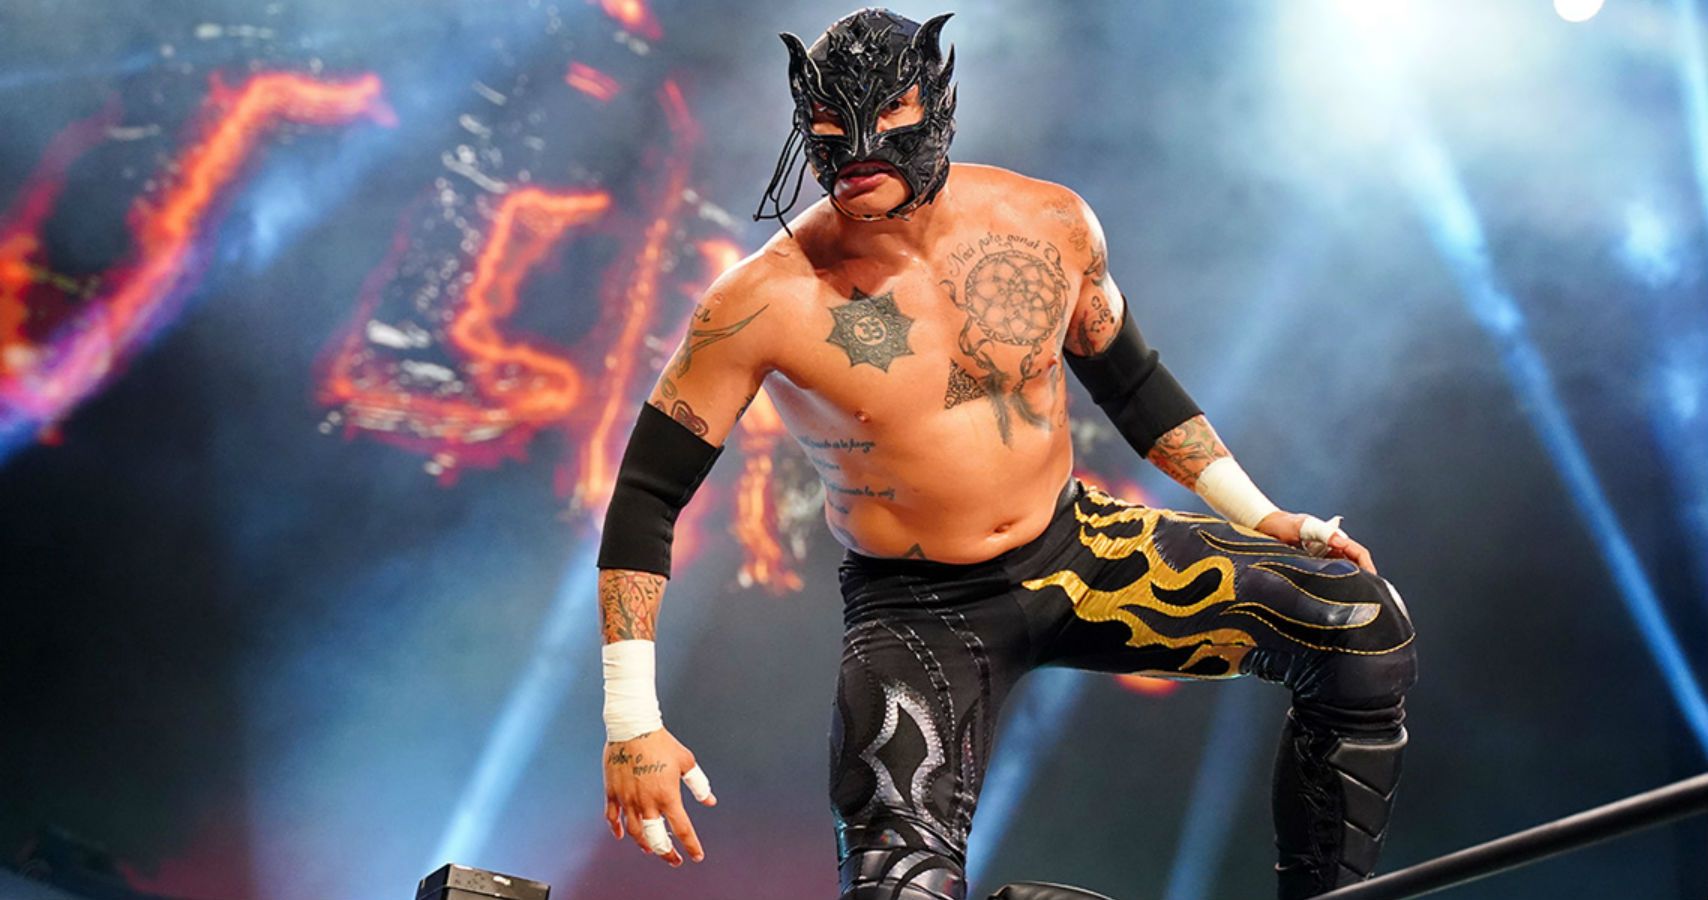 AEW Dynamite Update: Captain Insano Makes an Appearance, Rey Fenix Successfully Defends Title Against Jeff Jarrett